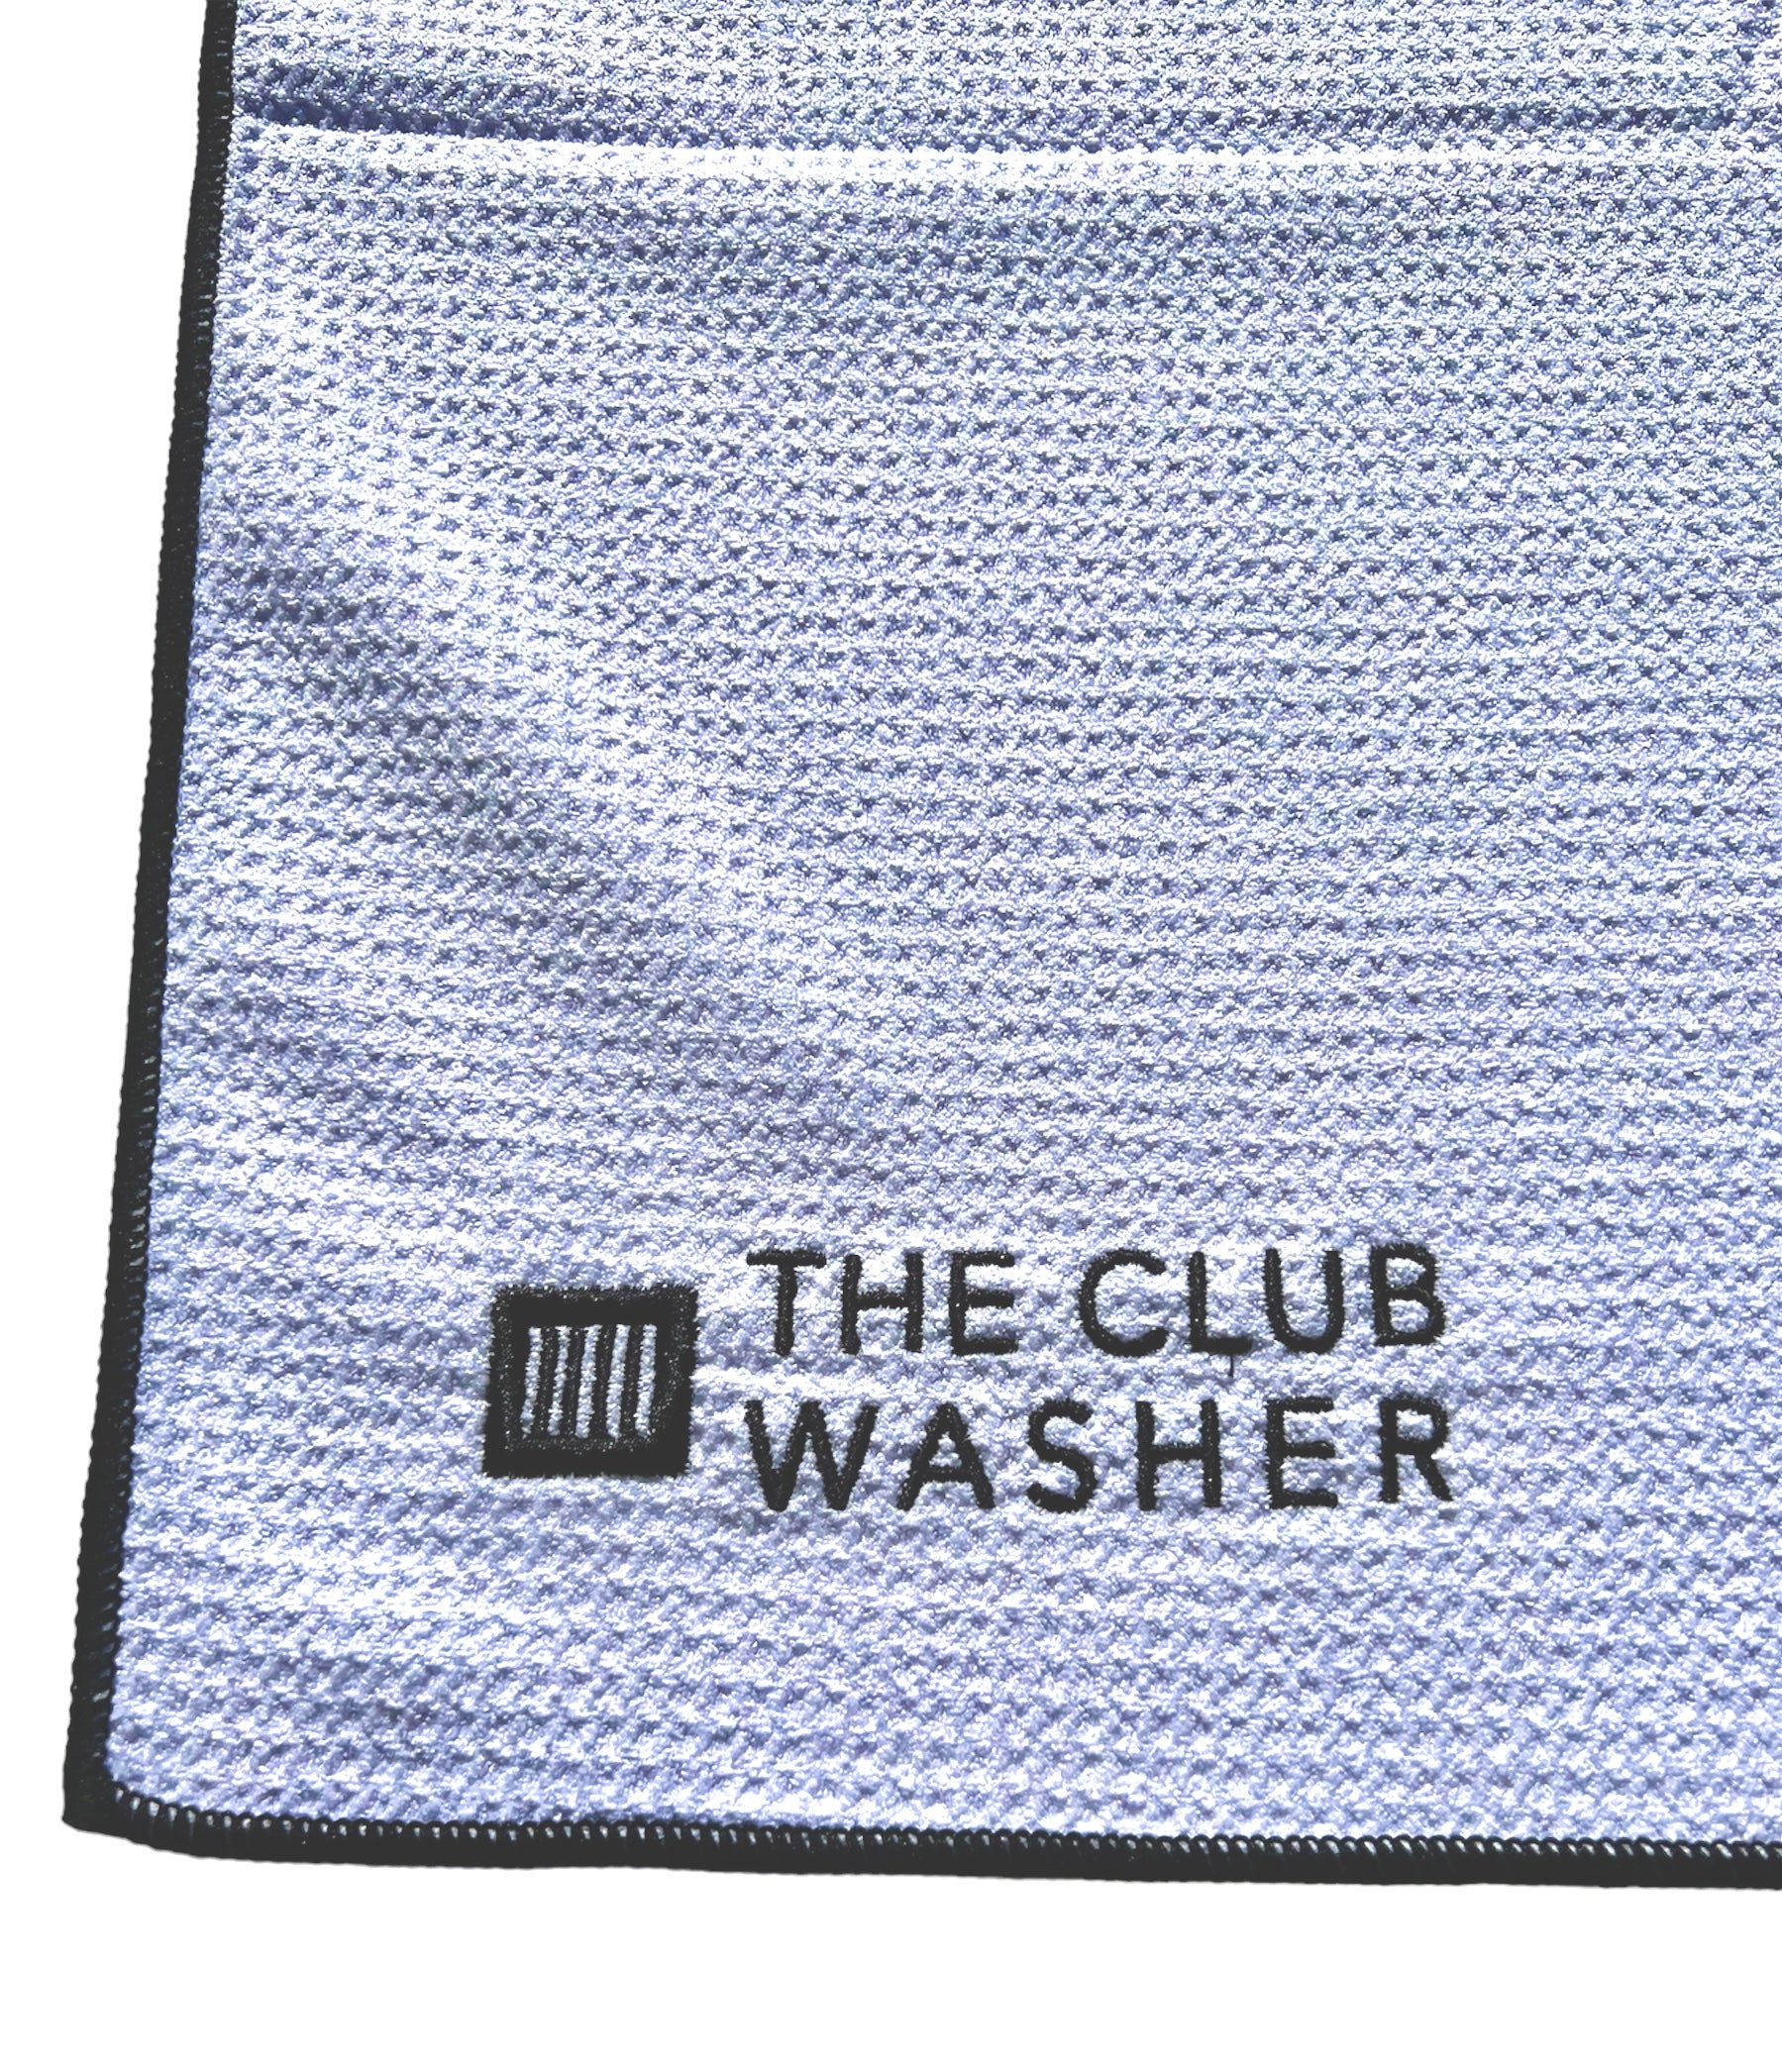 The Club Washer - Serviette de golf à tissage gaufré 20" X 40"